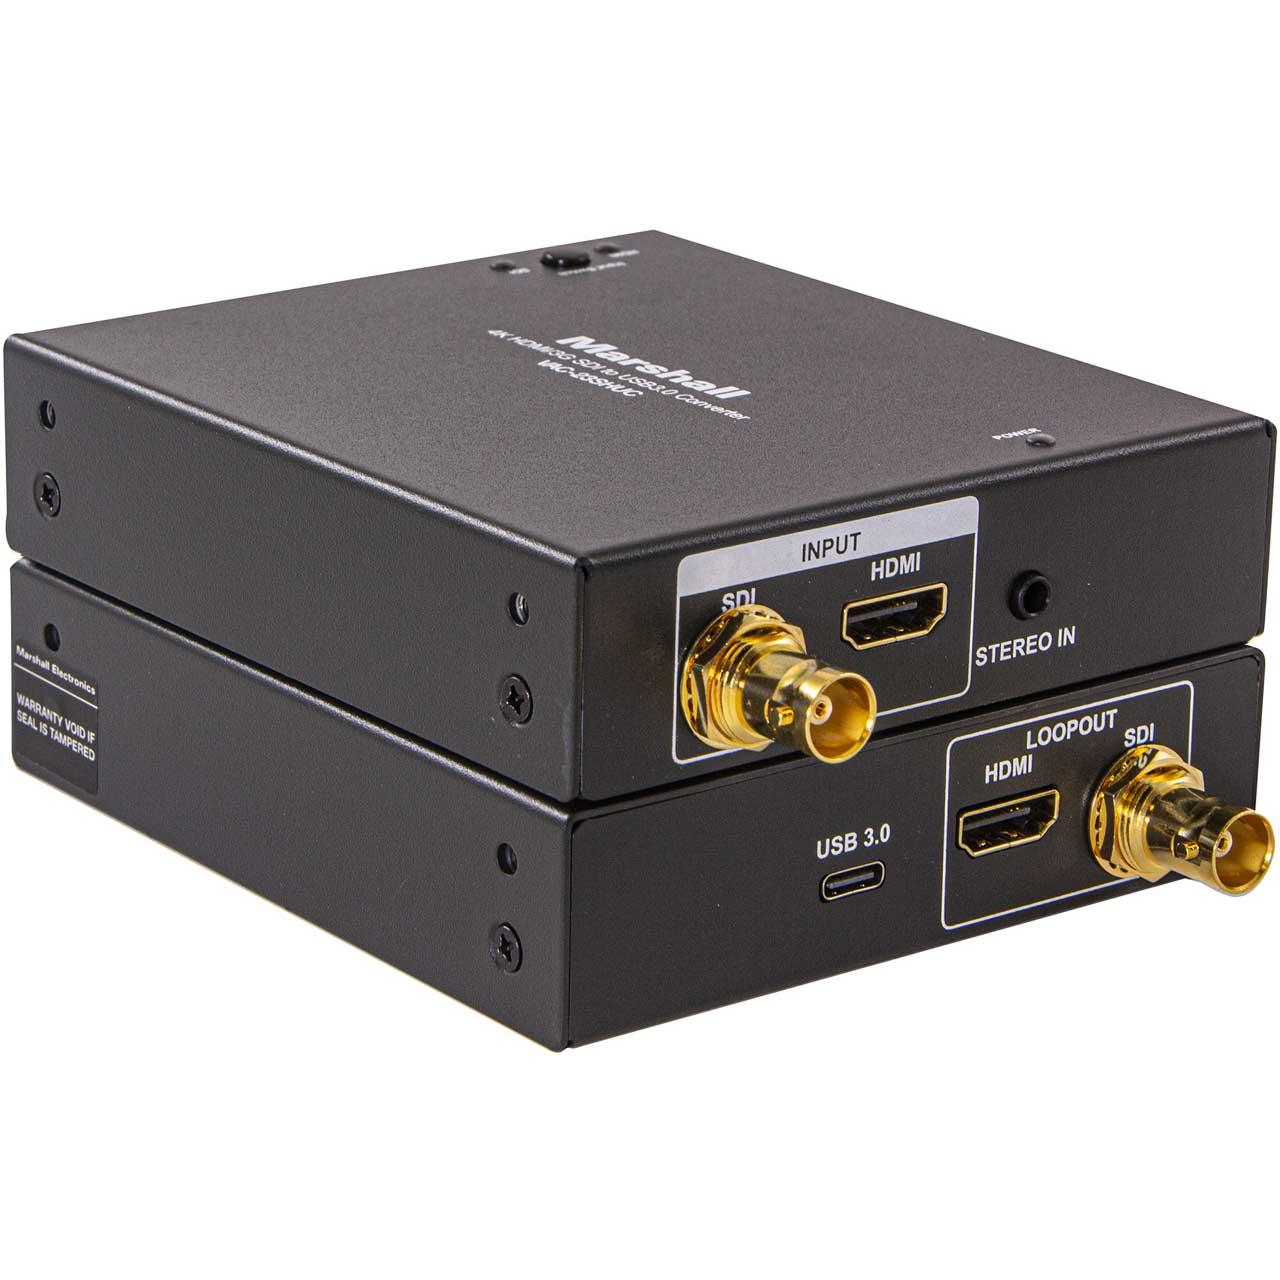 Marshall VAC-23SHUC 4K HDMI/3G-SDI to USB 3.0 Converter